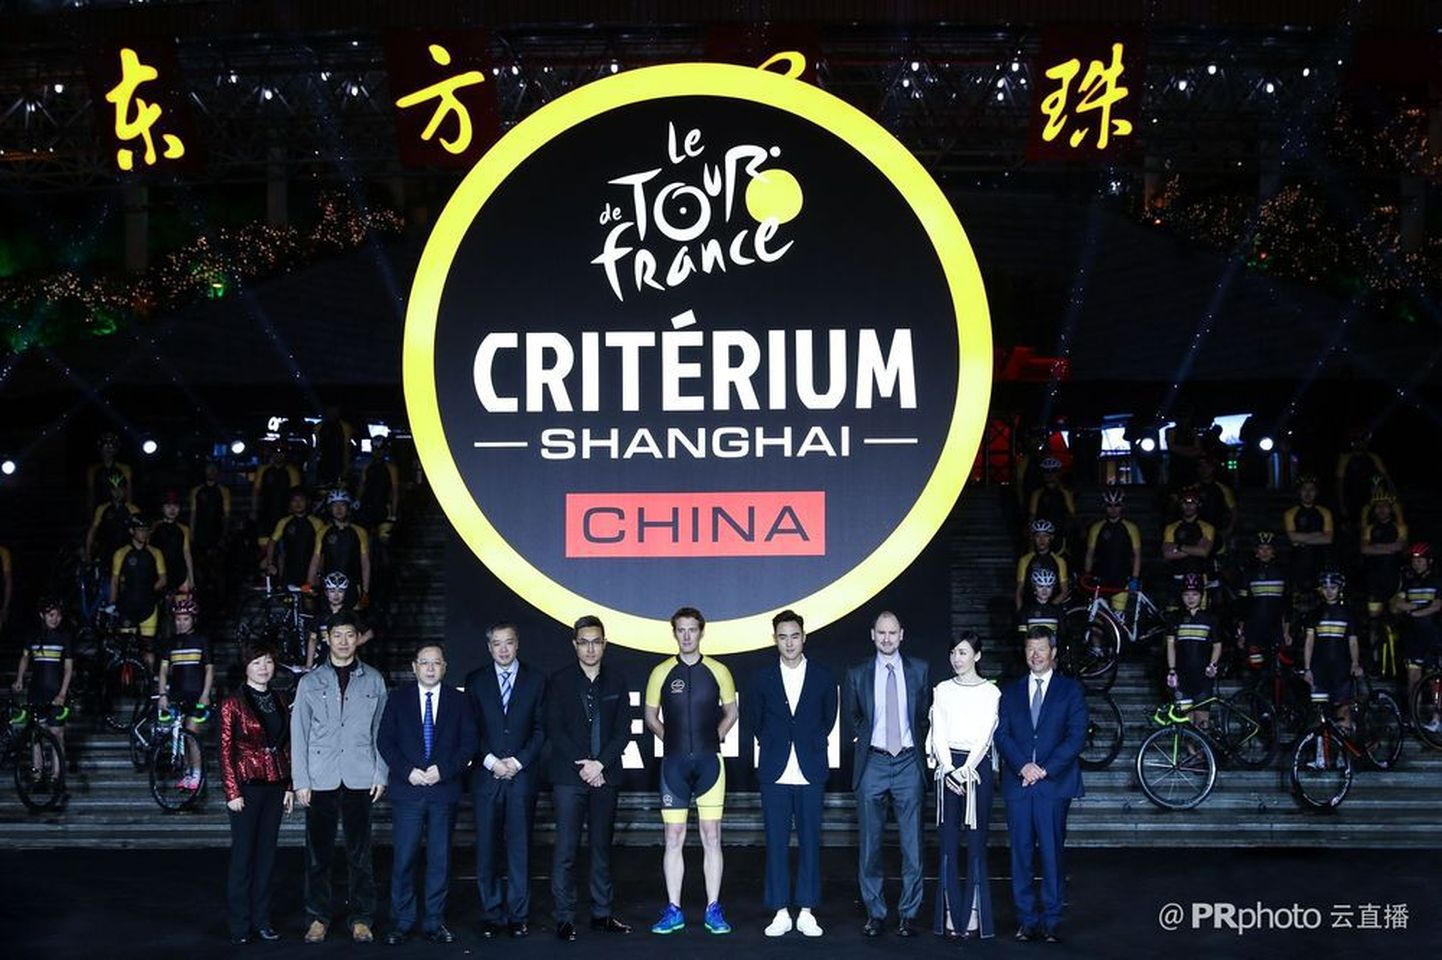 Tour de France'i China Critériumi väljakuulutamine.